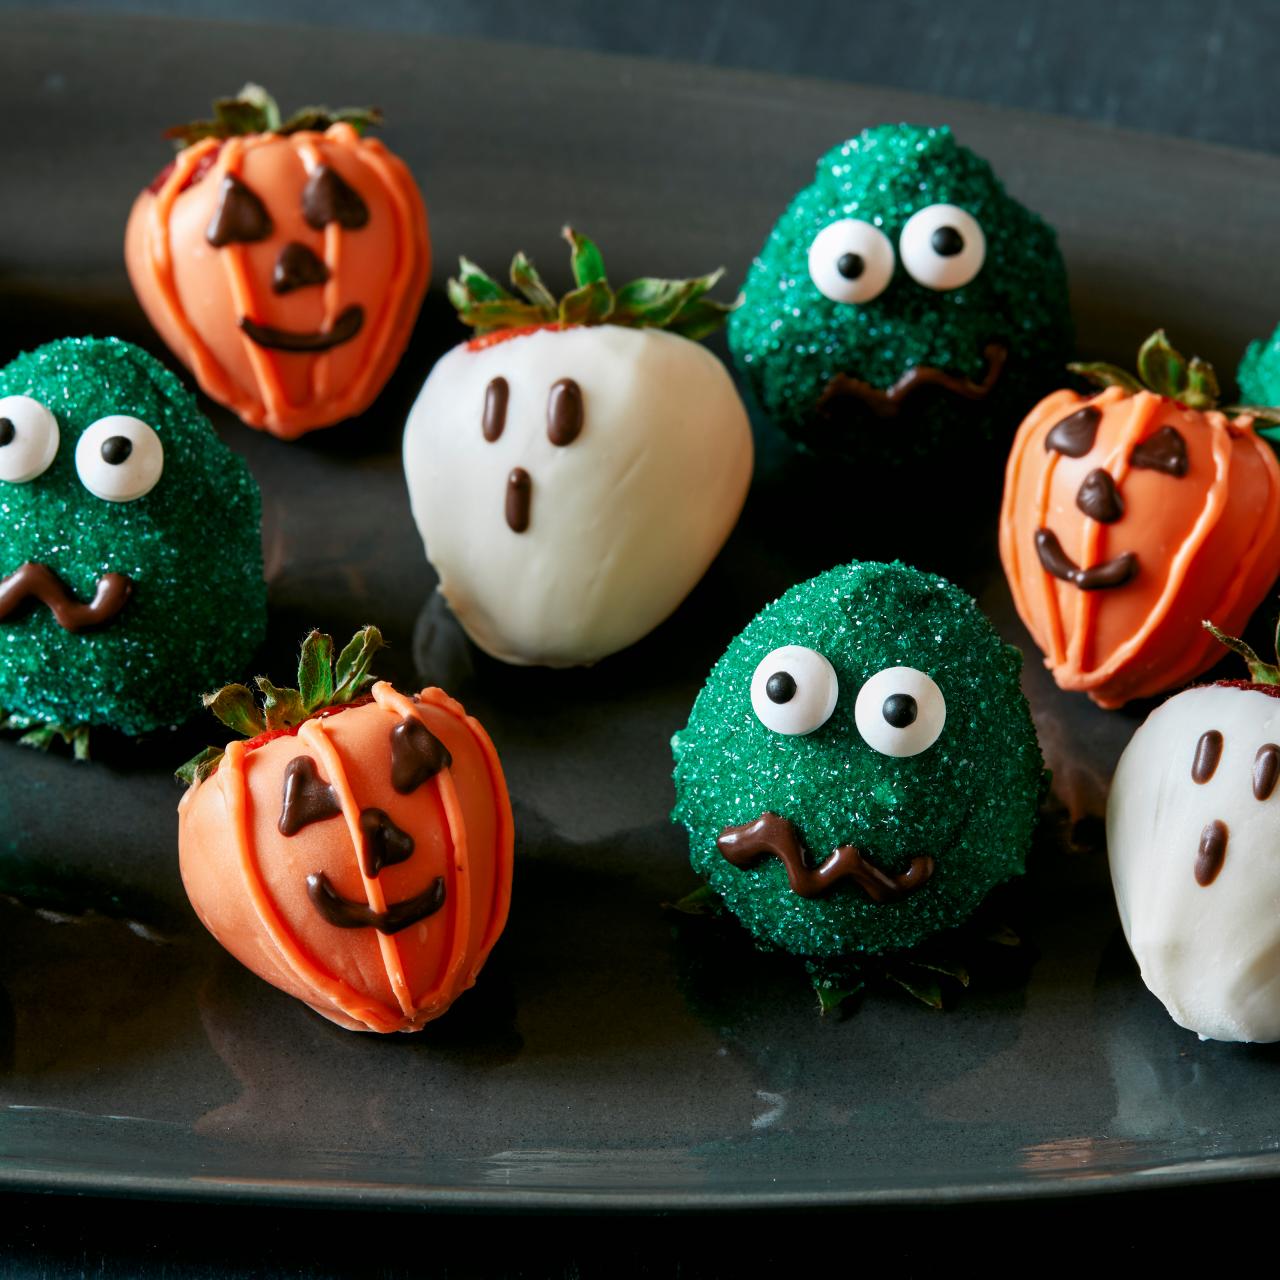 50 Best Halloween Recipes, Halloween Party Food Ideas